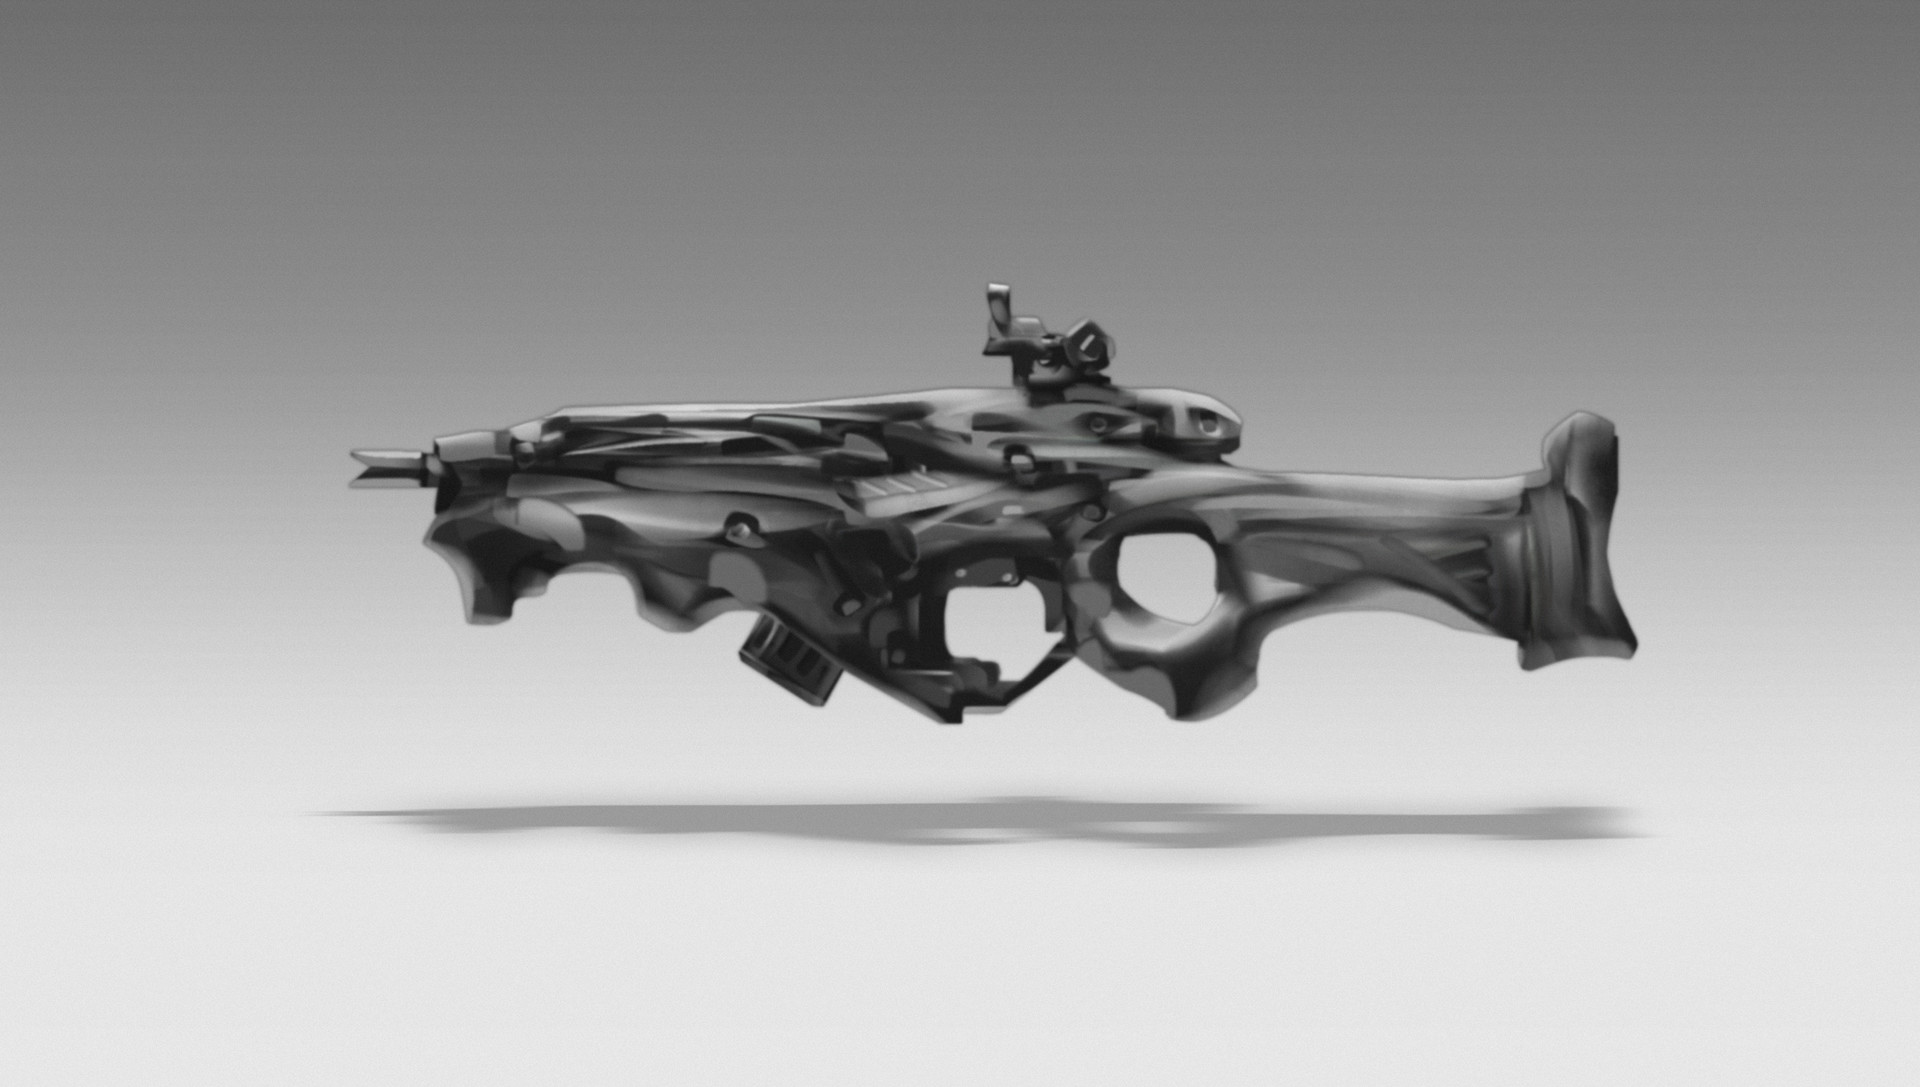 ArtStation - Assault rifle design